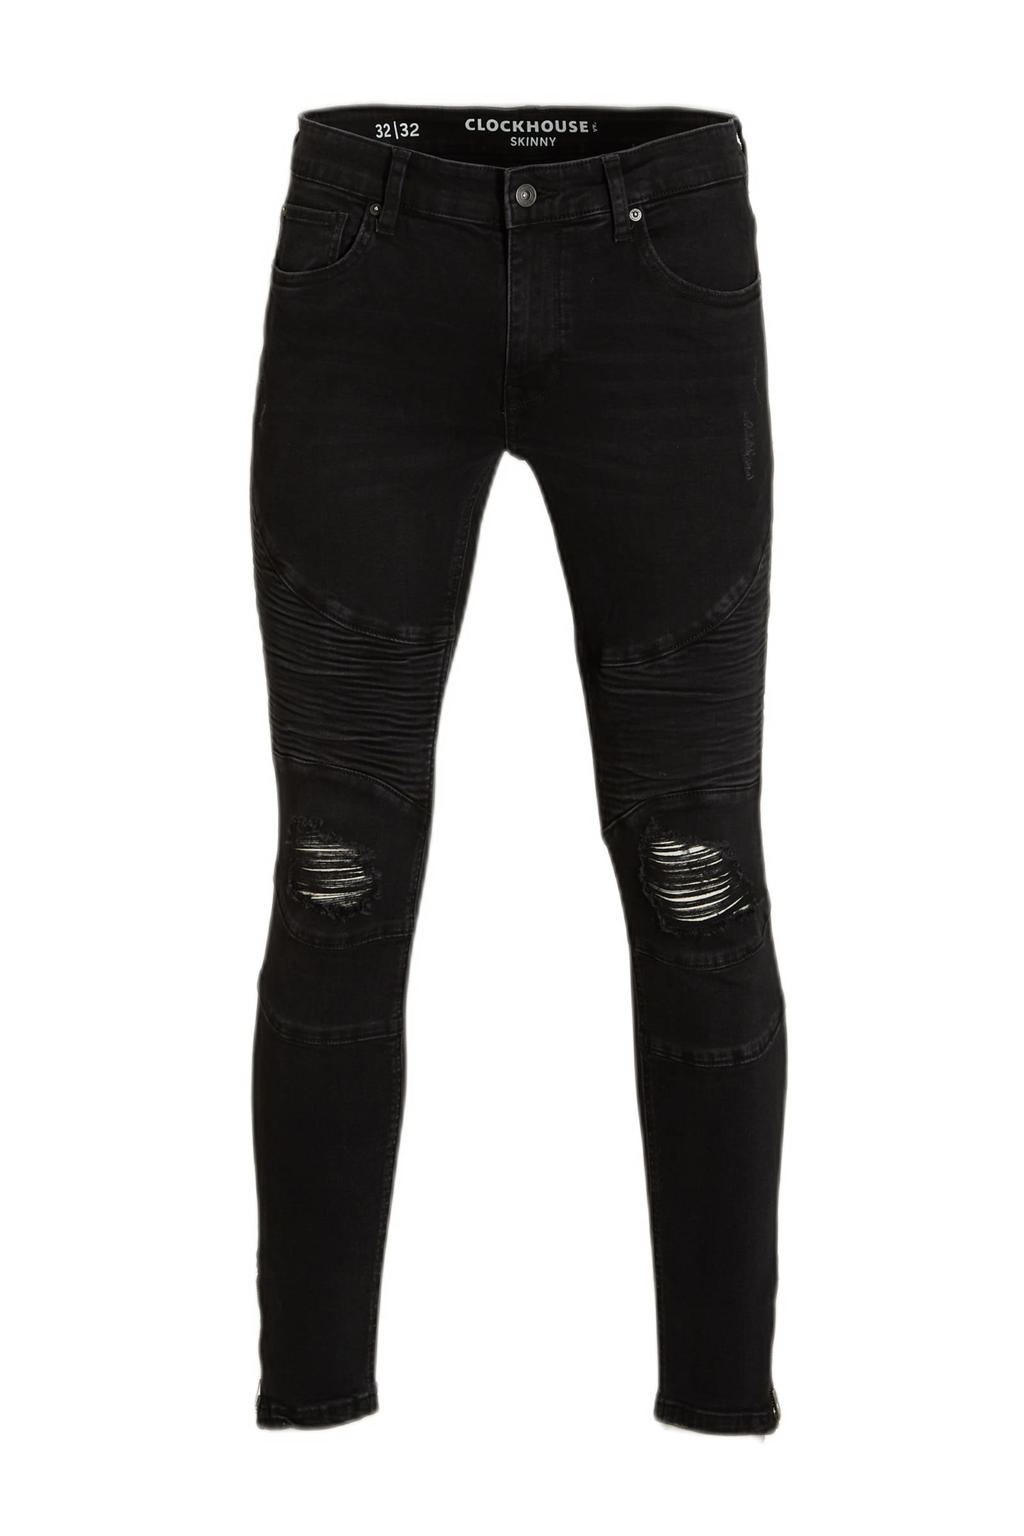 C&A Clockhouse skinny jeans zwart